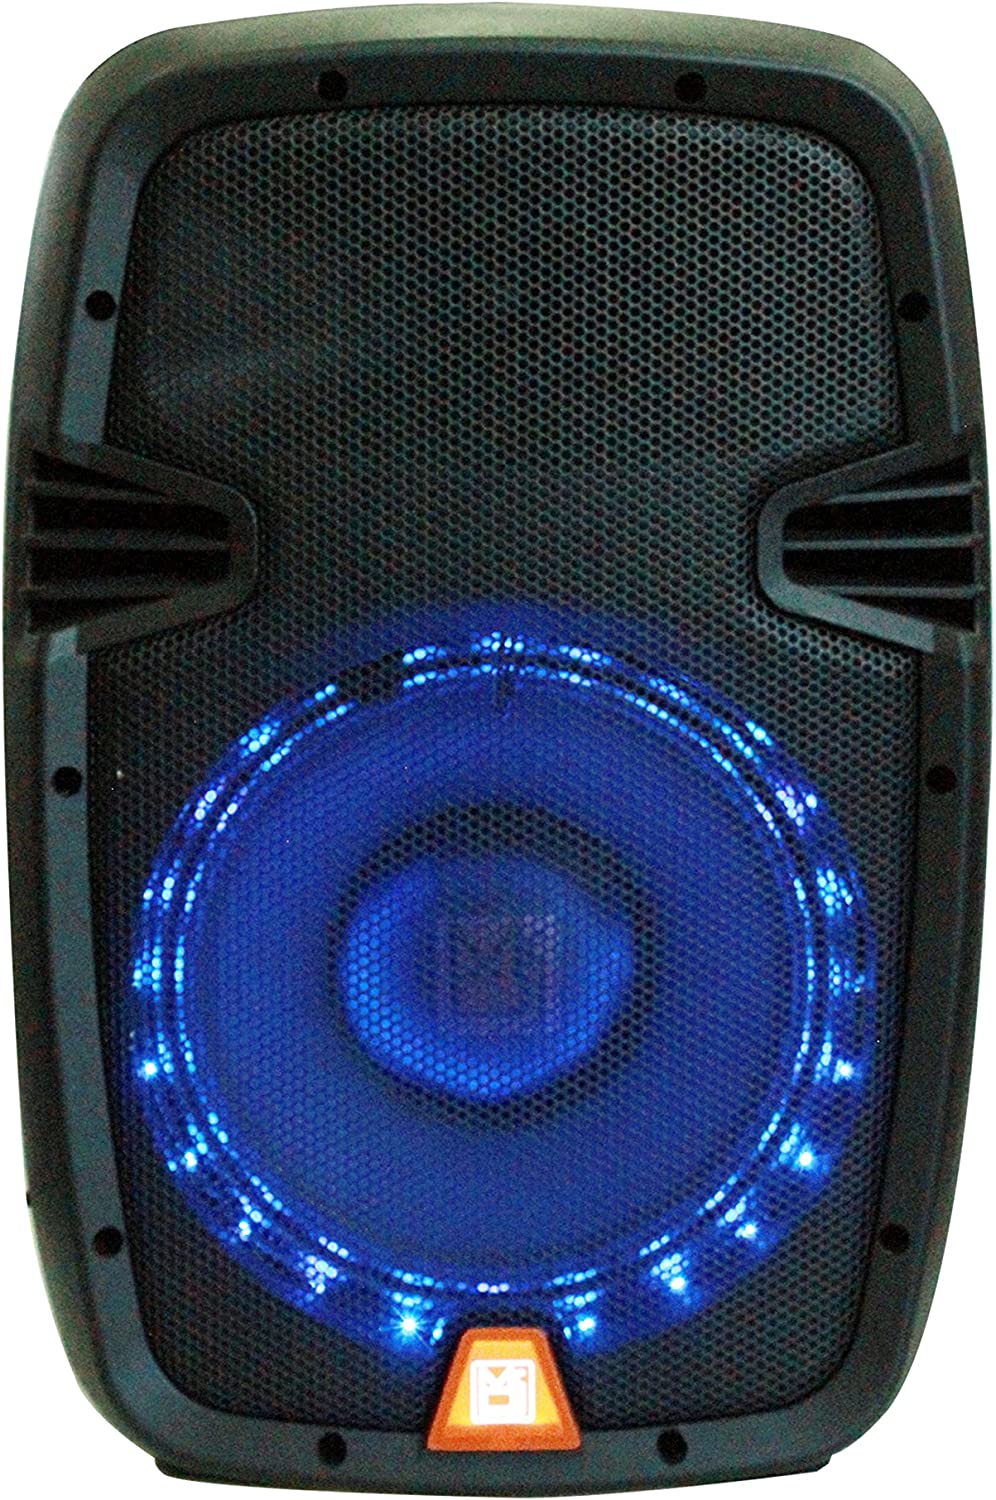 Mr. Dj PBX1859S 10" 2-Way Portable Passive Speaker with LED Accent Lighting